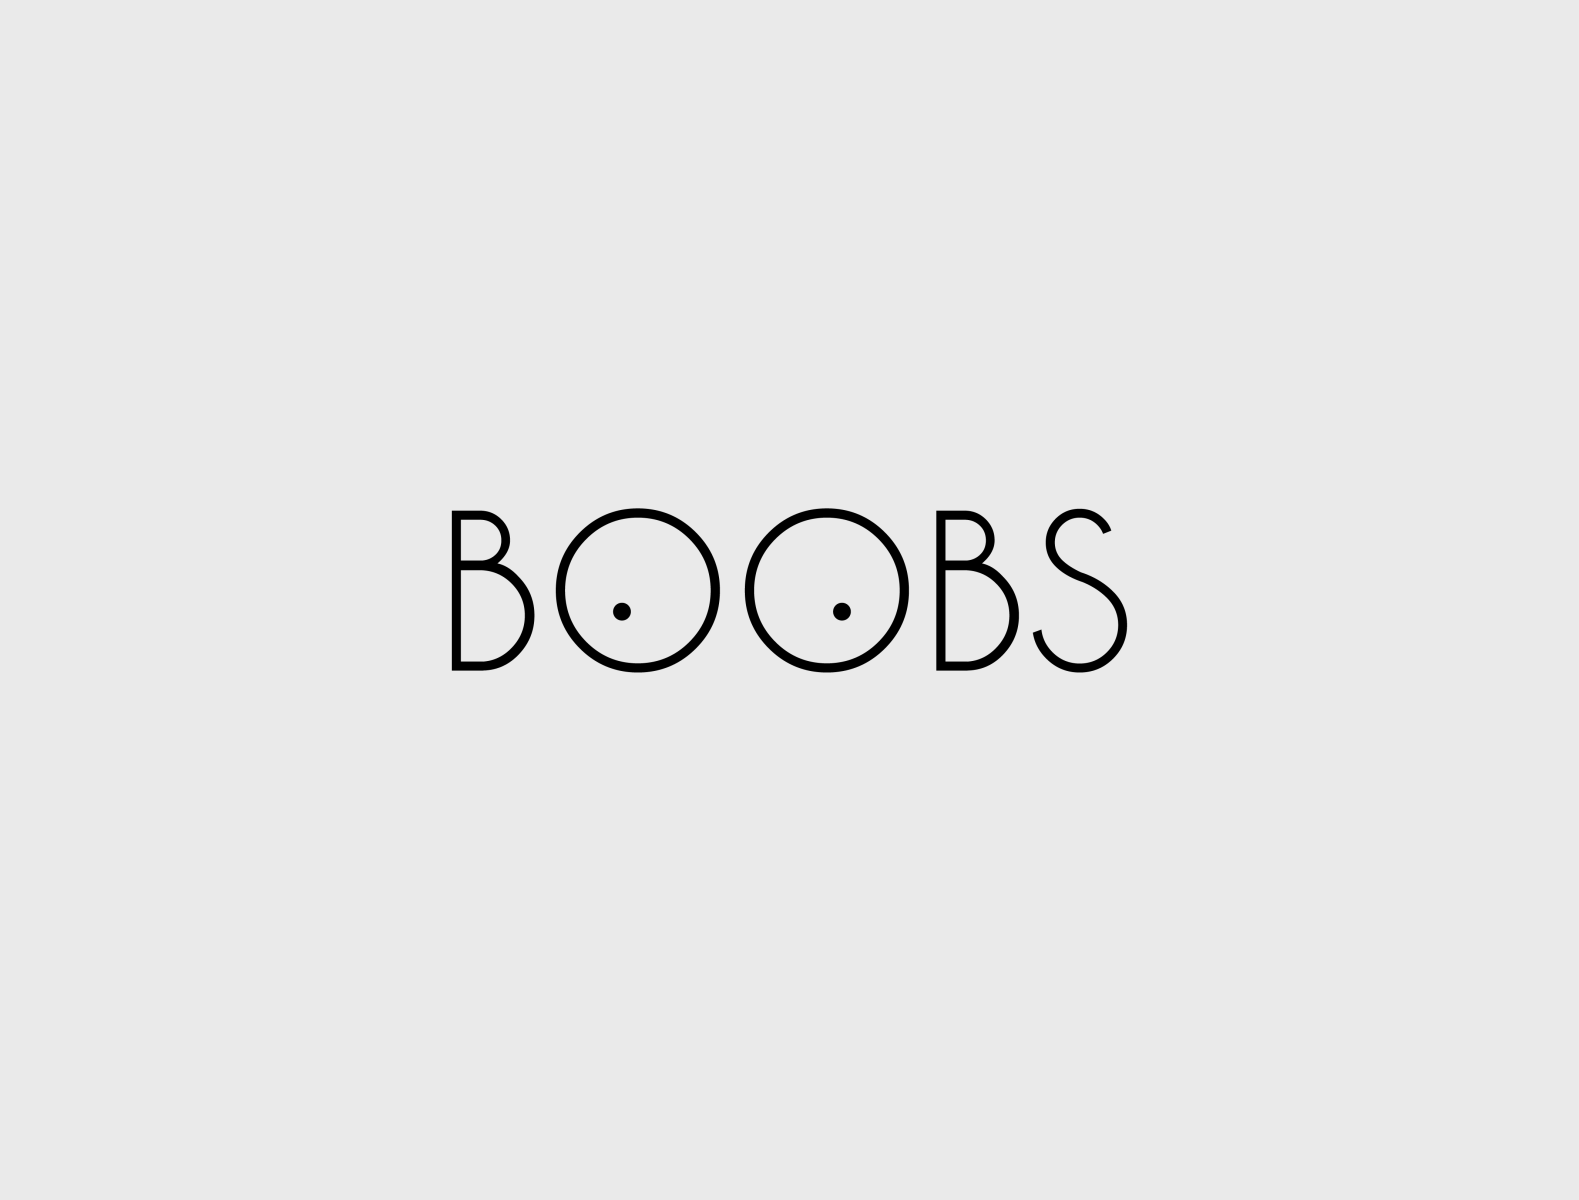 Boobs by Tsiory Razafindrabe on Dribbble